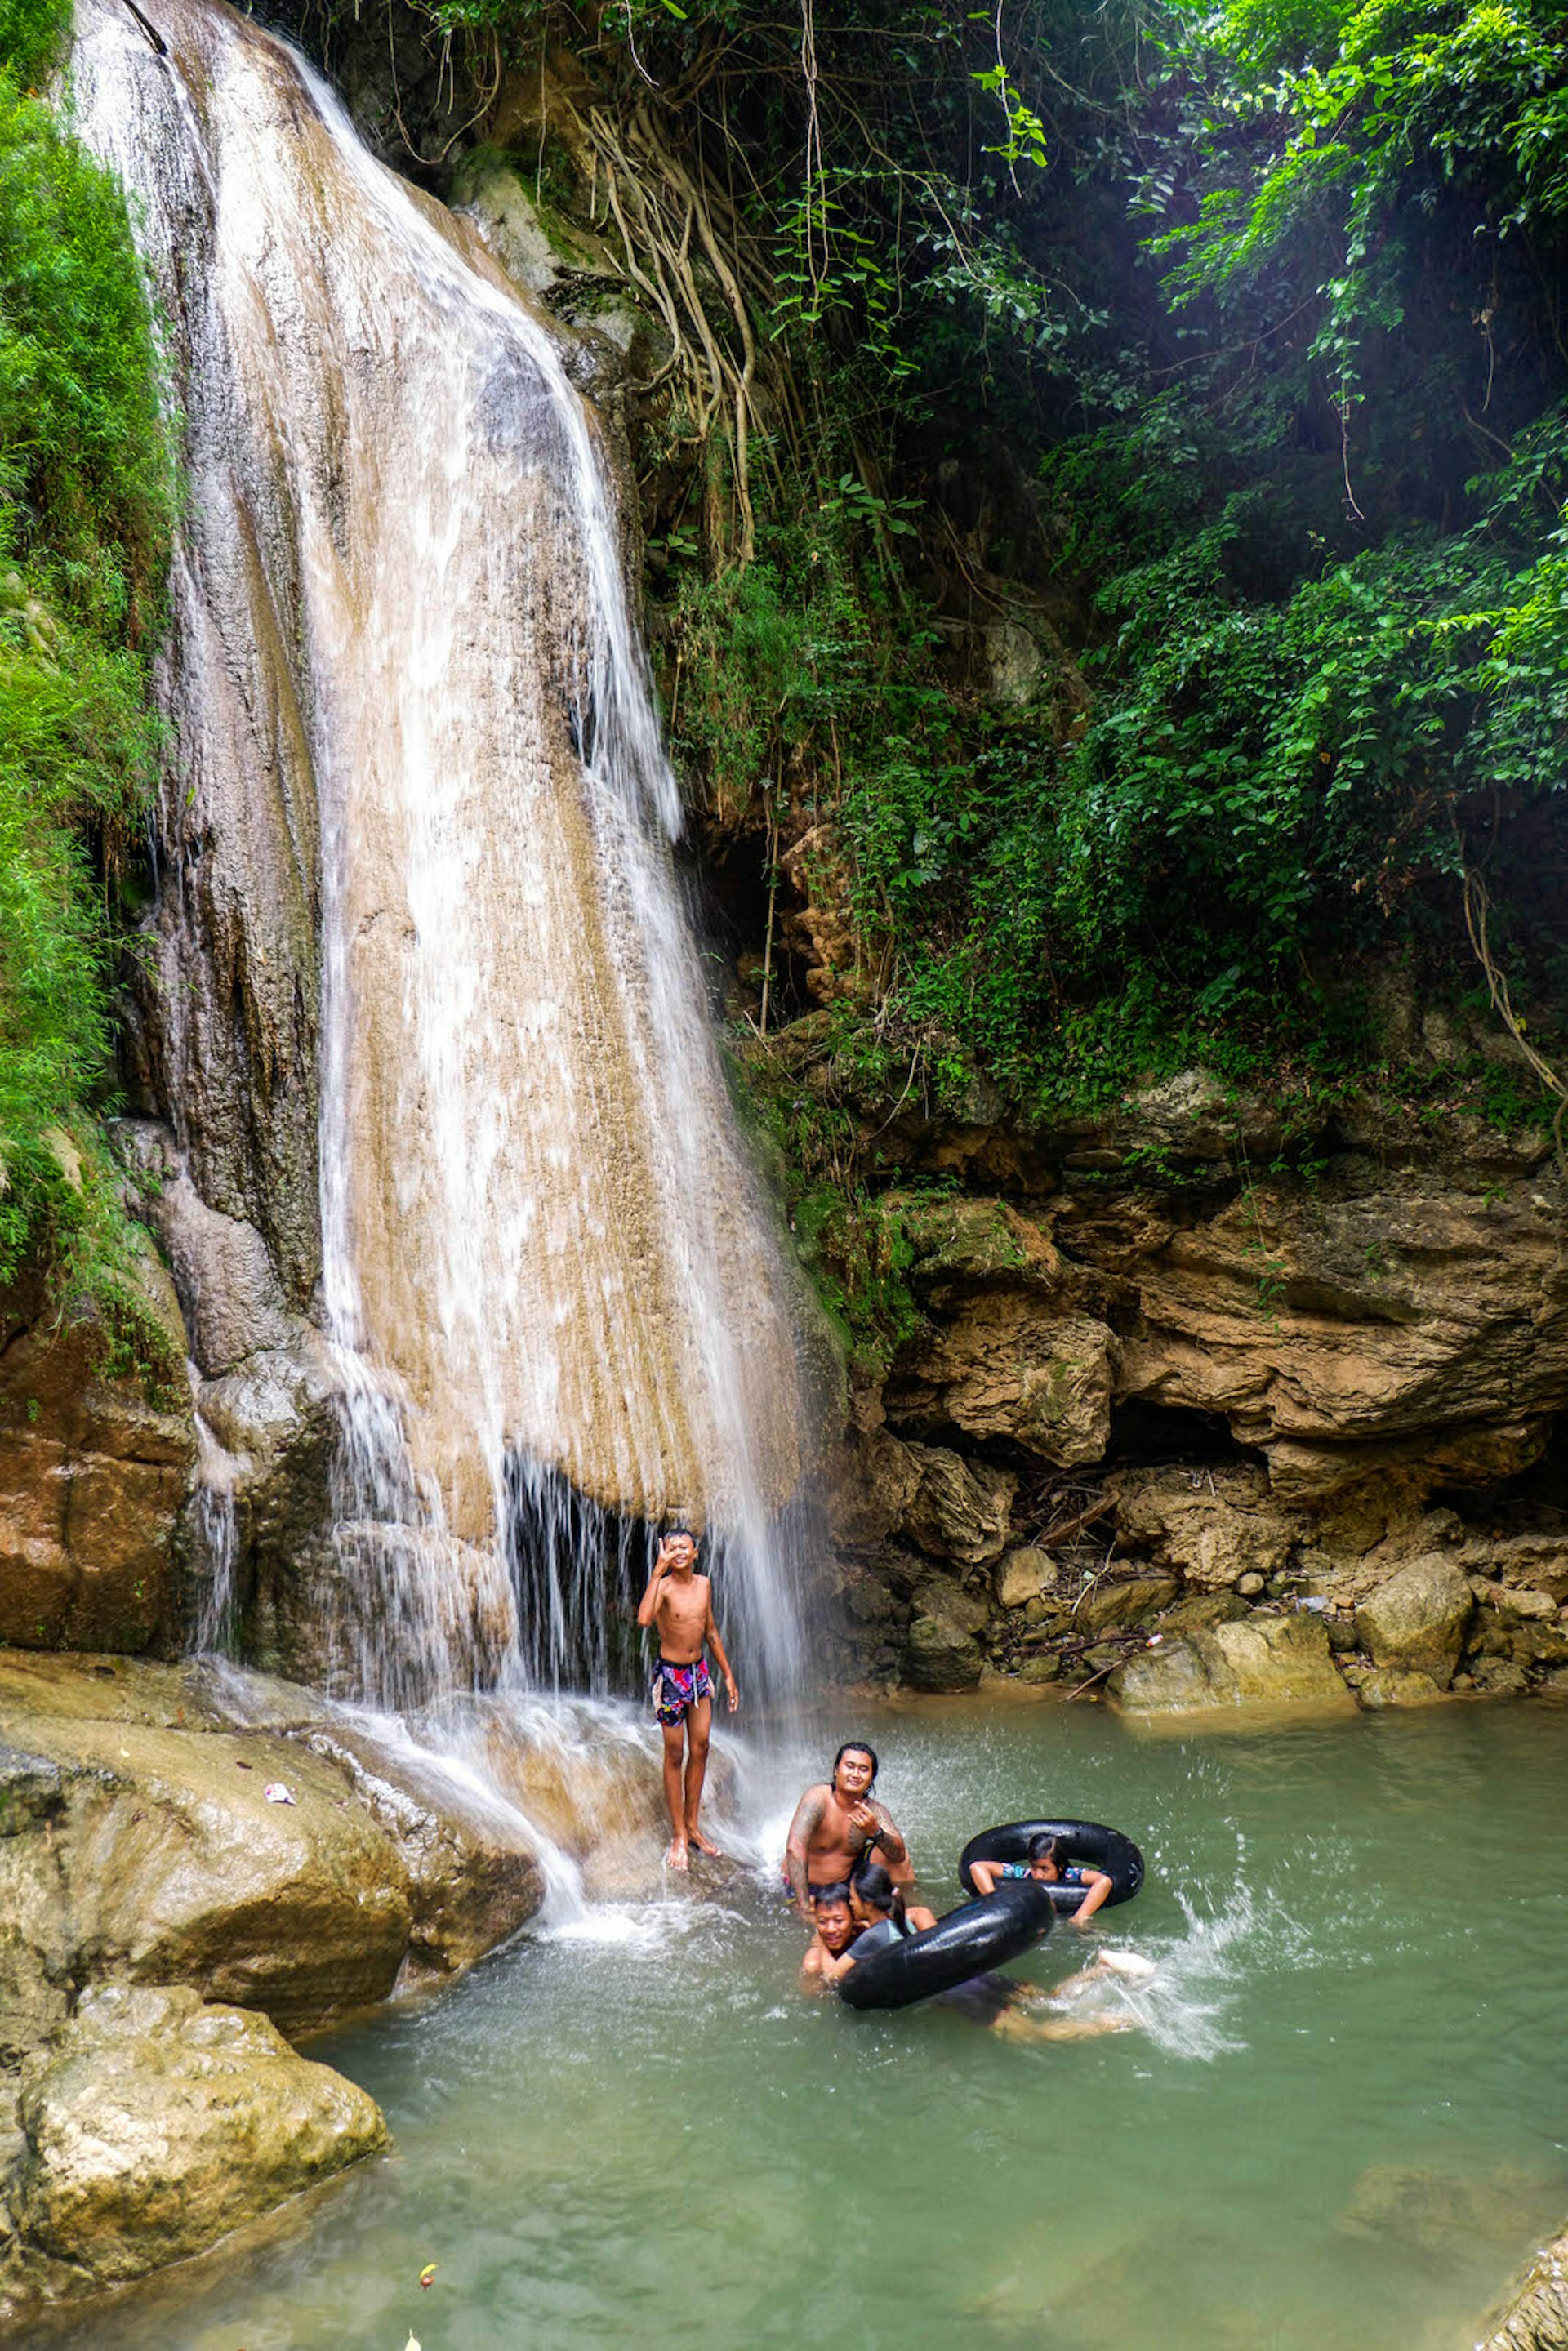 A group pose at the bottom of Whak Kar falls